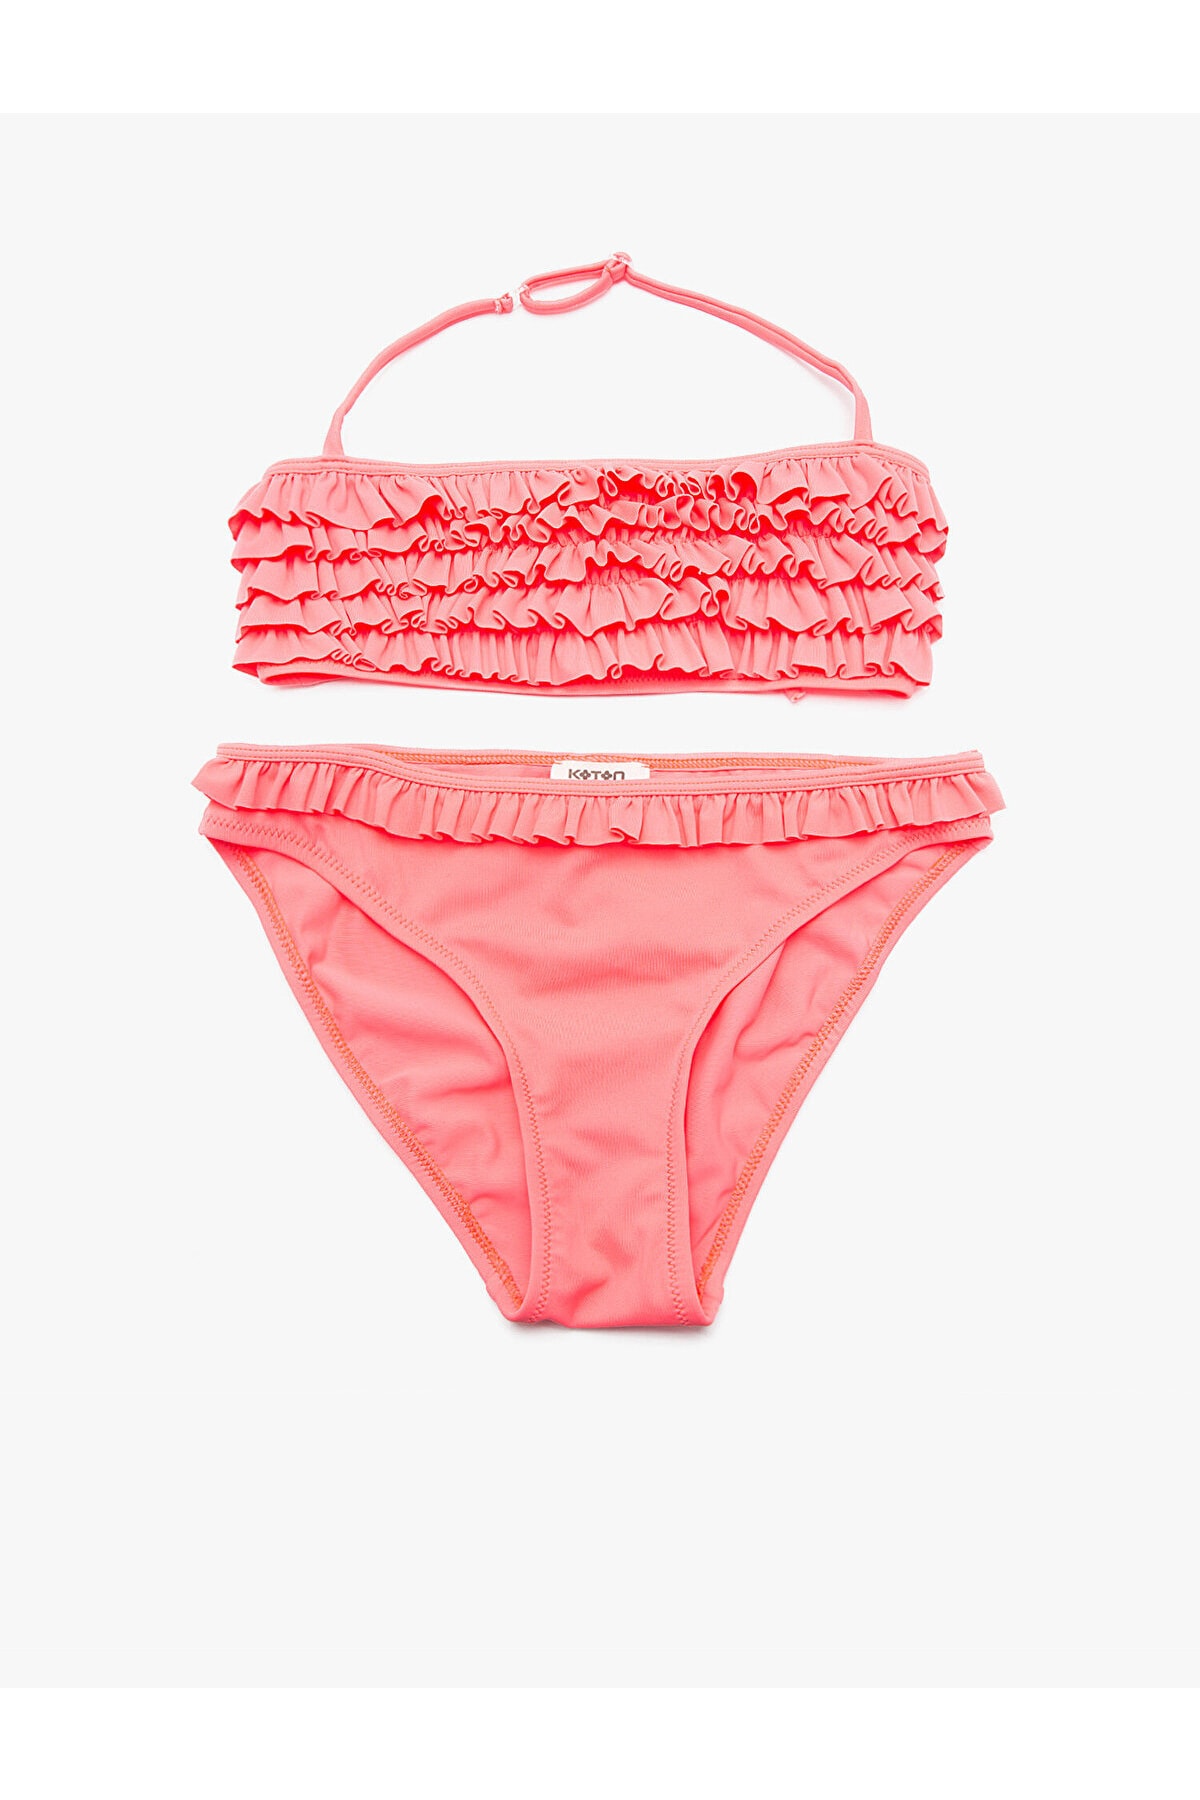 Koton Girl's Red Frill Detailed Bikini Set